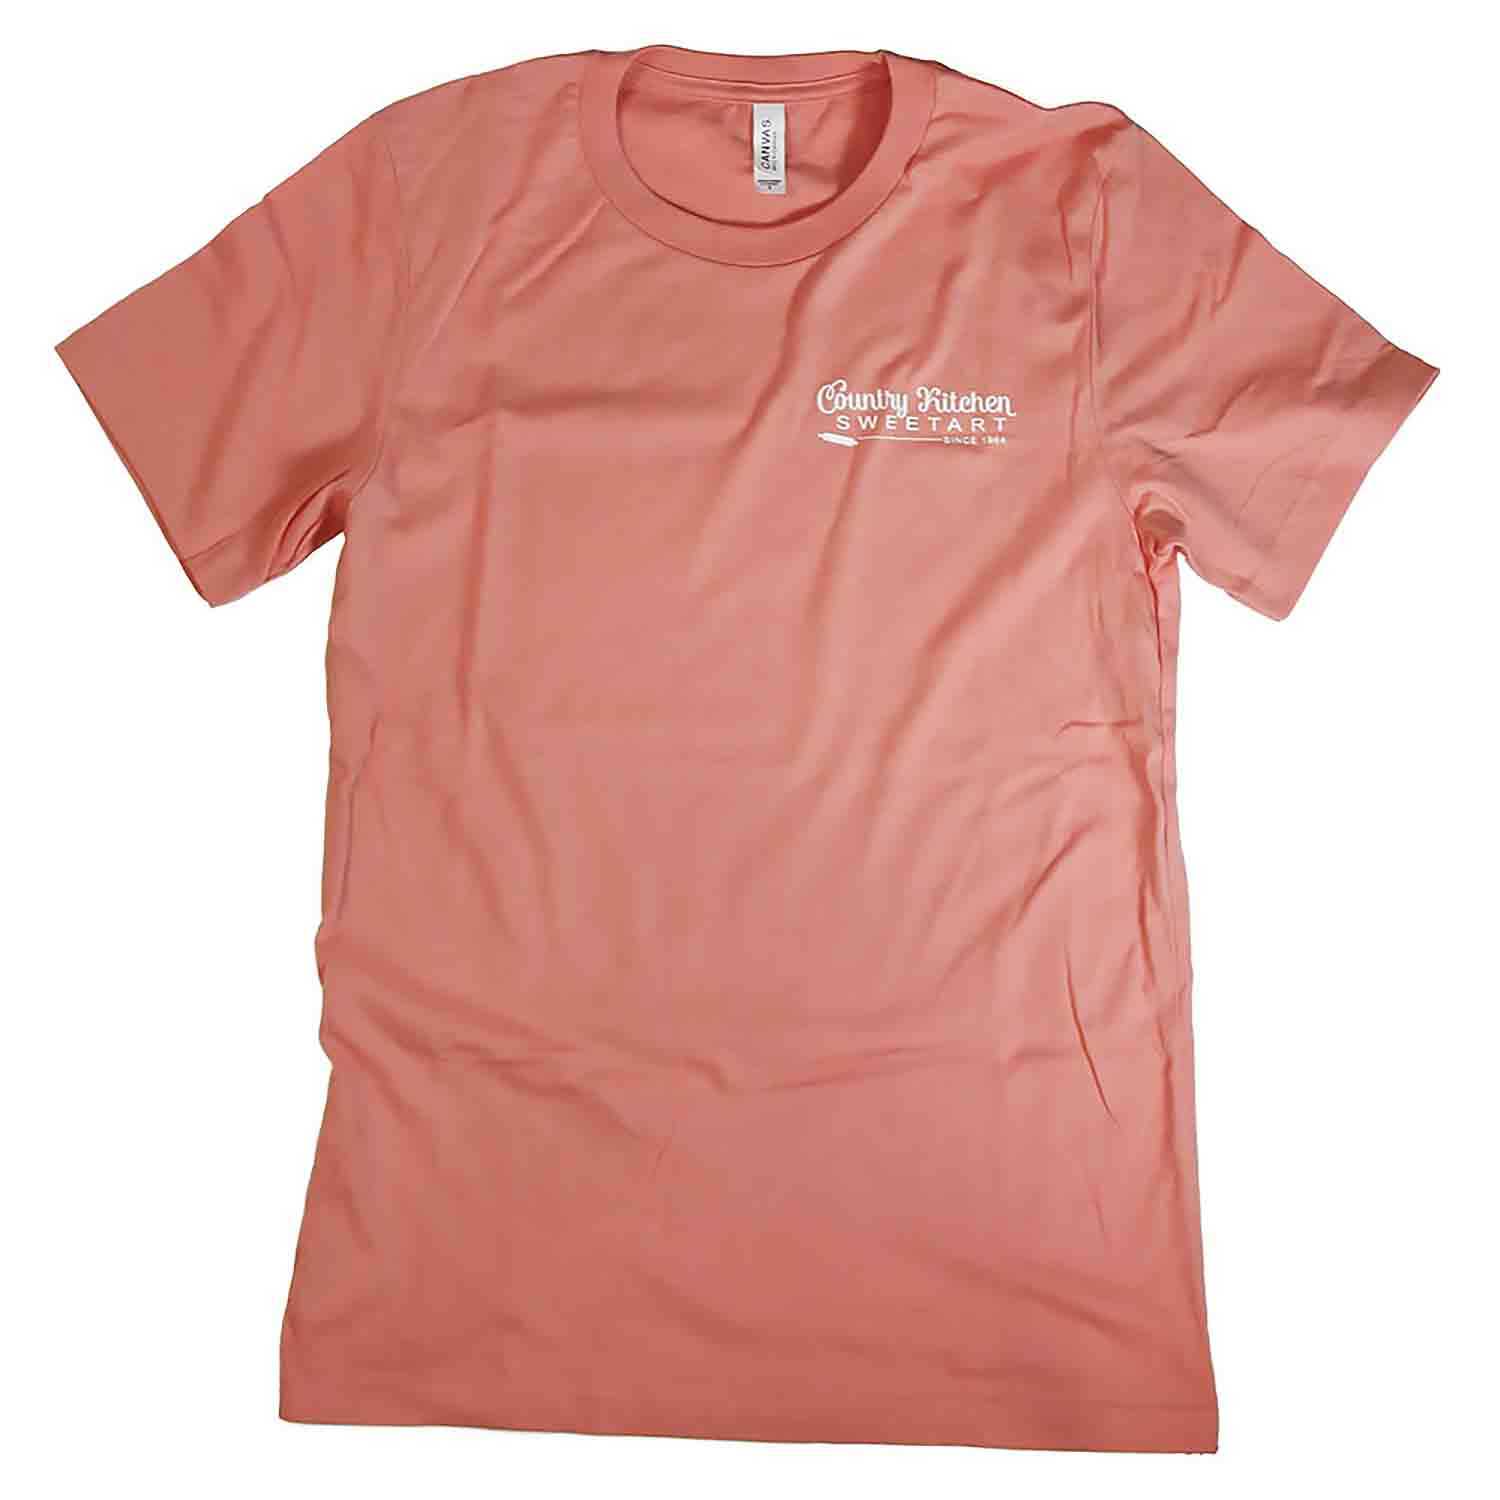 Peach Country Kitchen Sweetart T-Shirt - Small